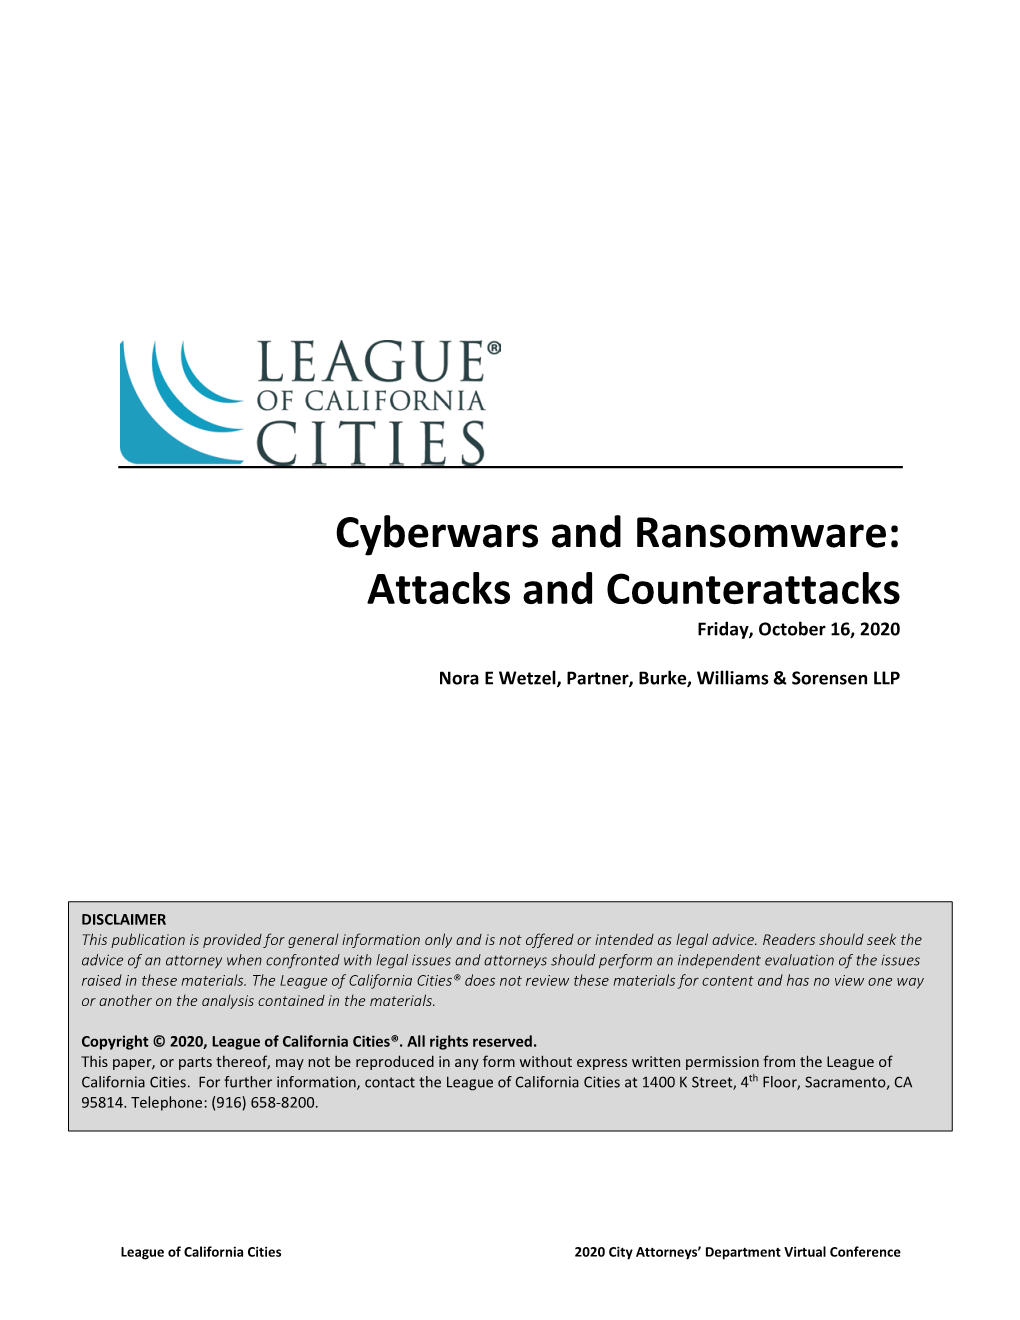 Cyberwars and Ransomware: Attacks and Counterattacks Friday, October 16, 2020